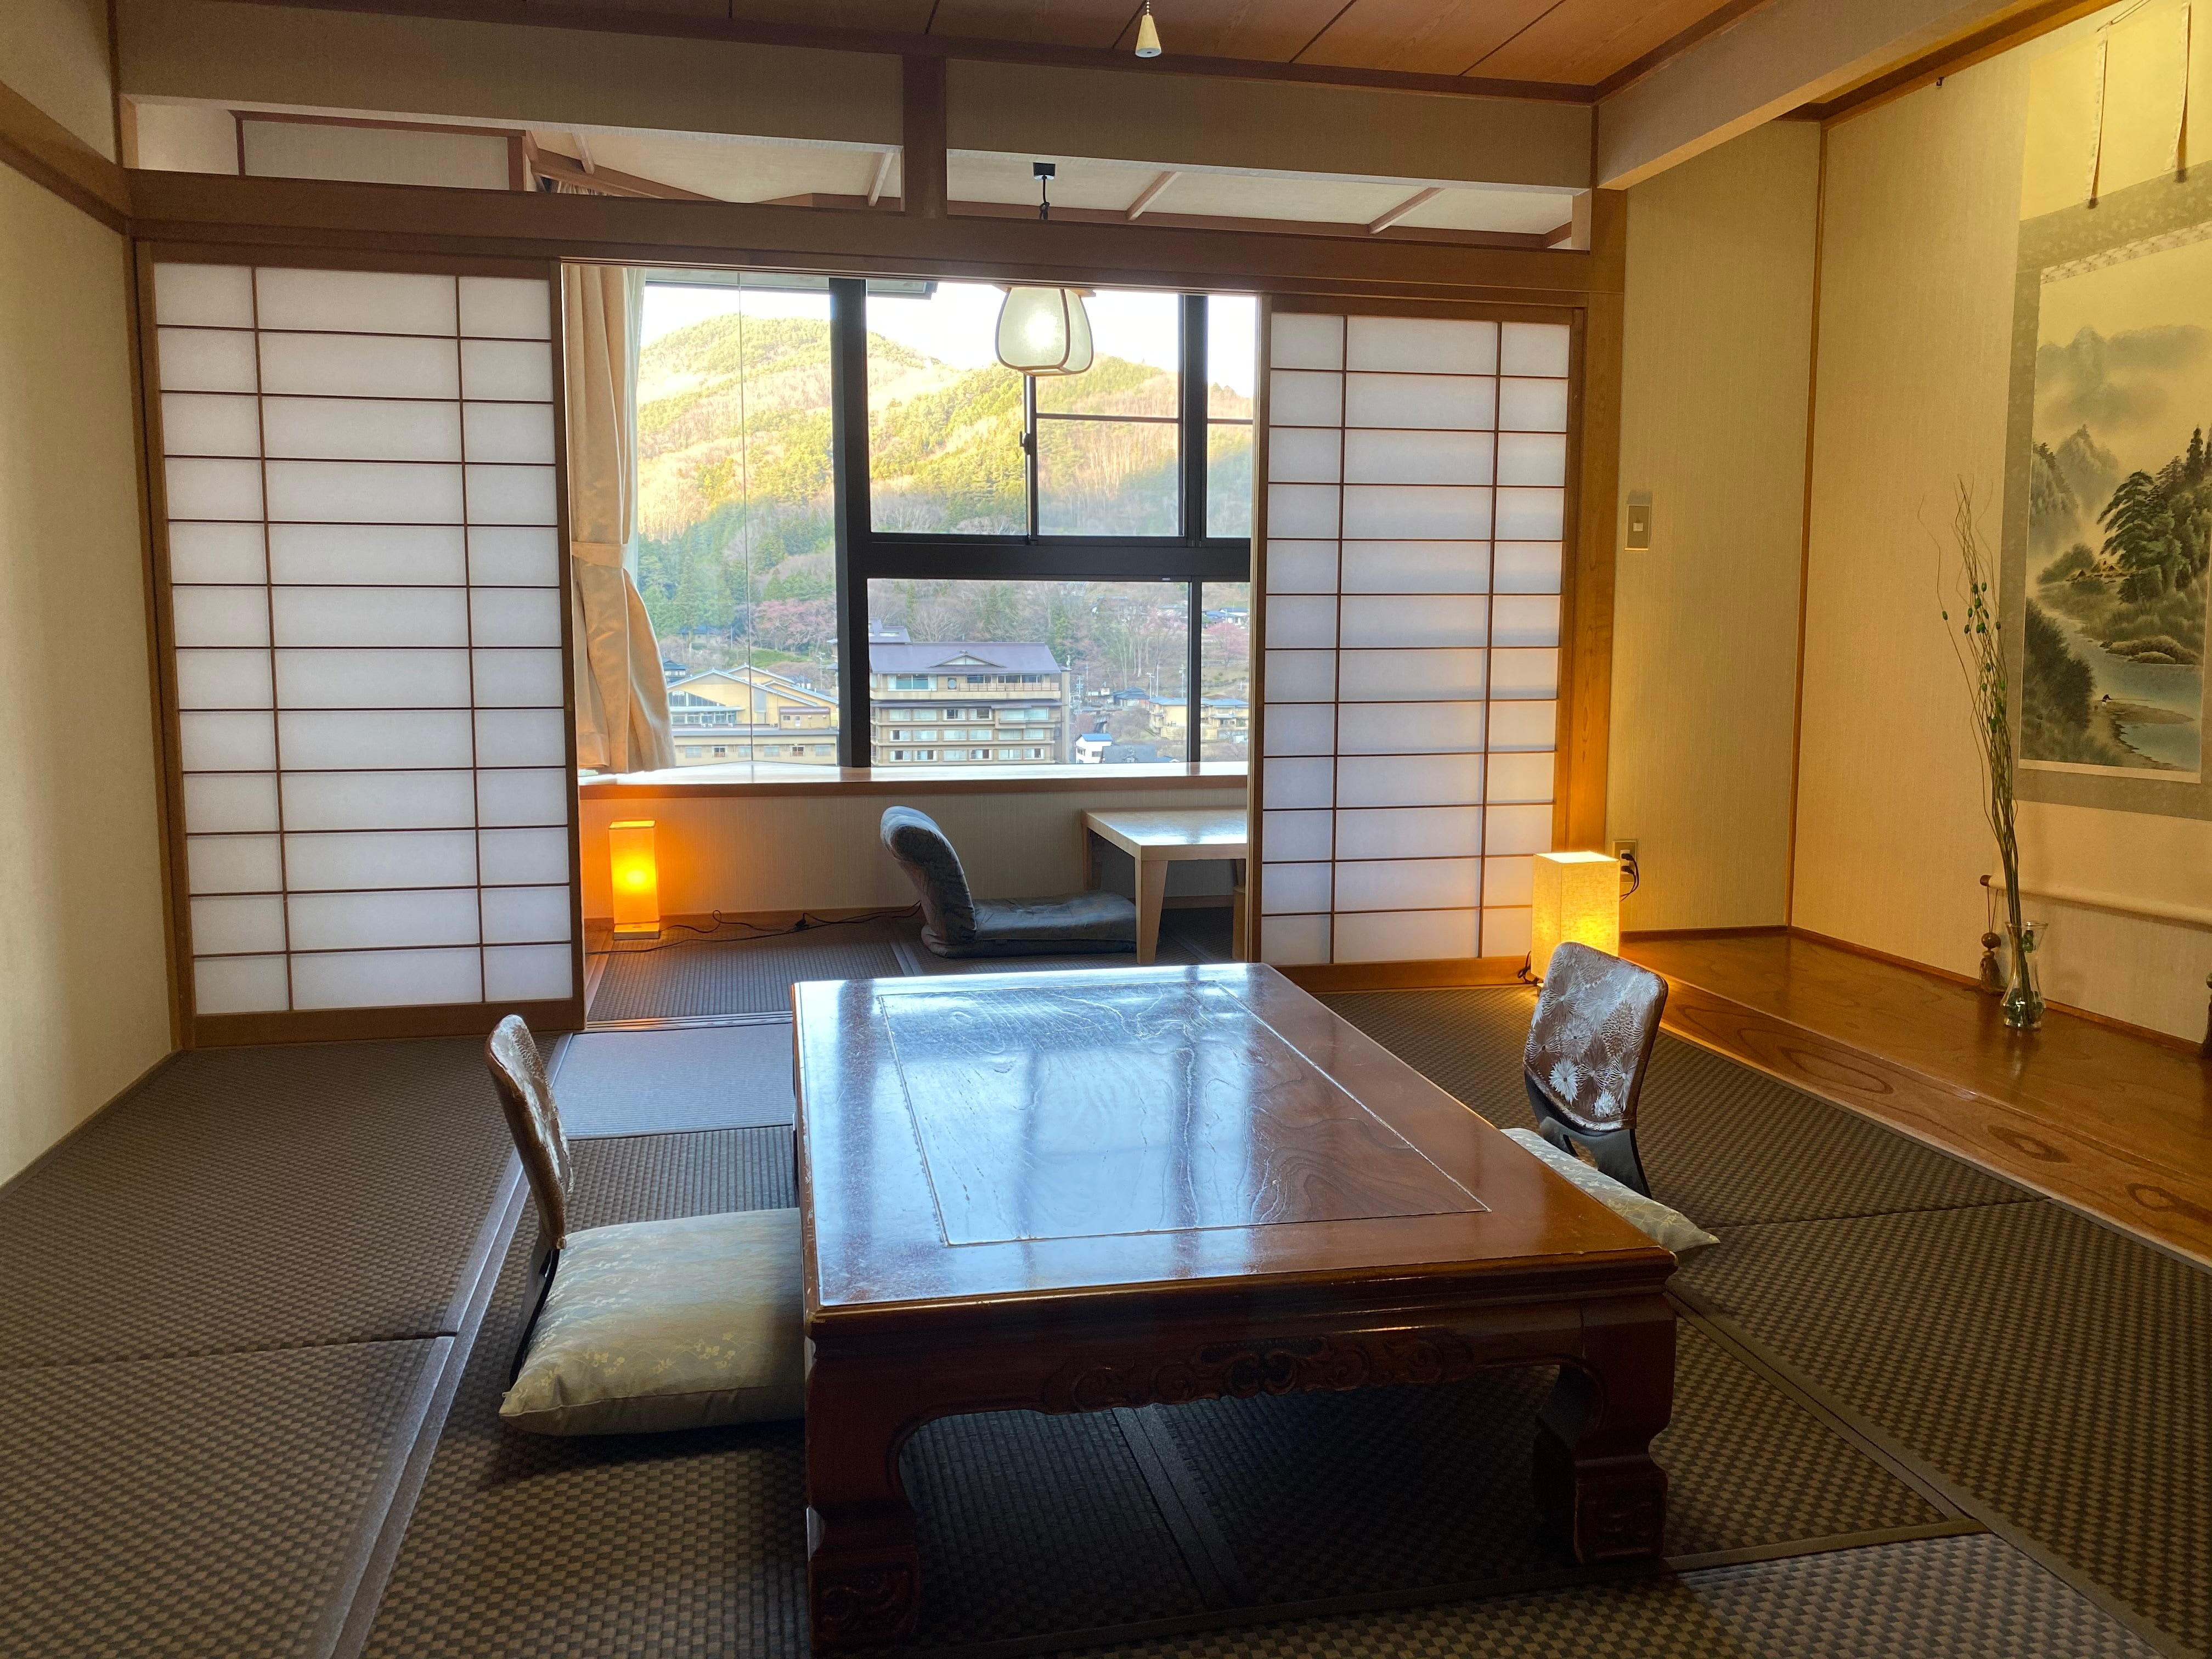 Kamar tamu modern Jepang